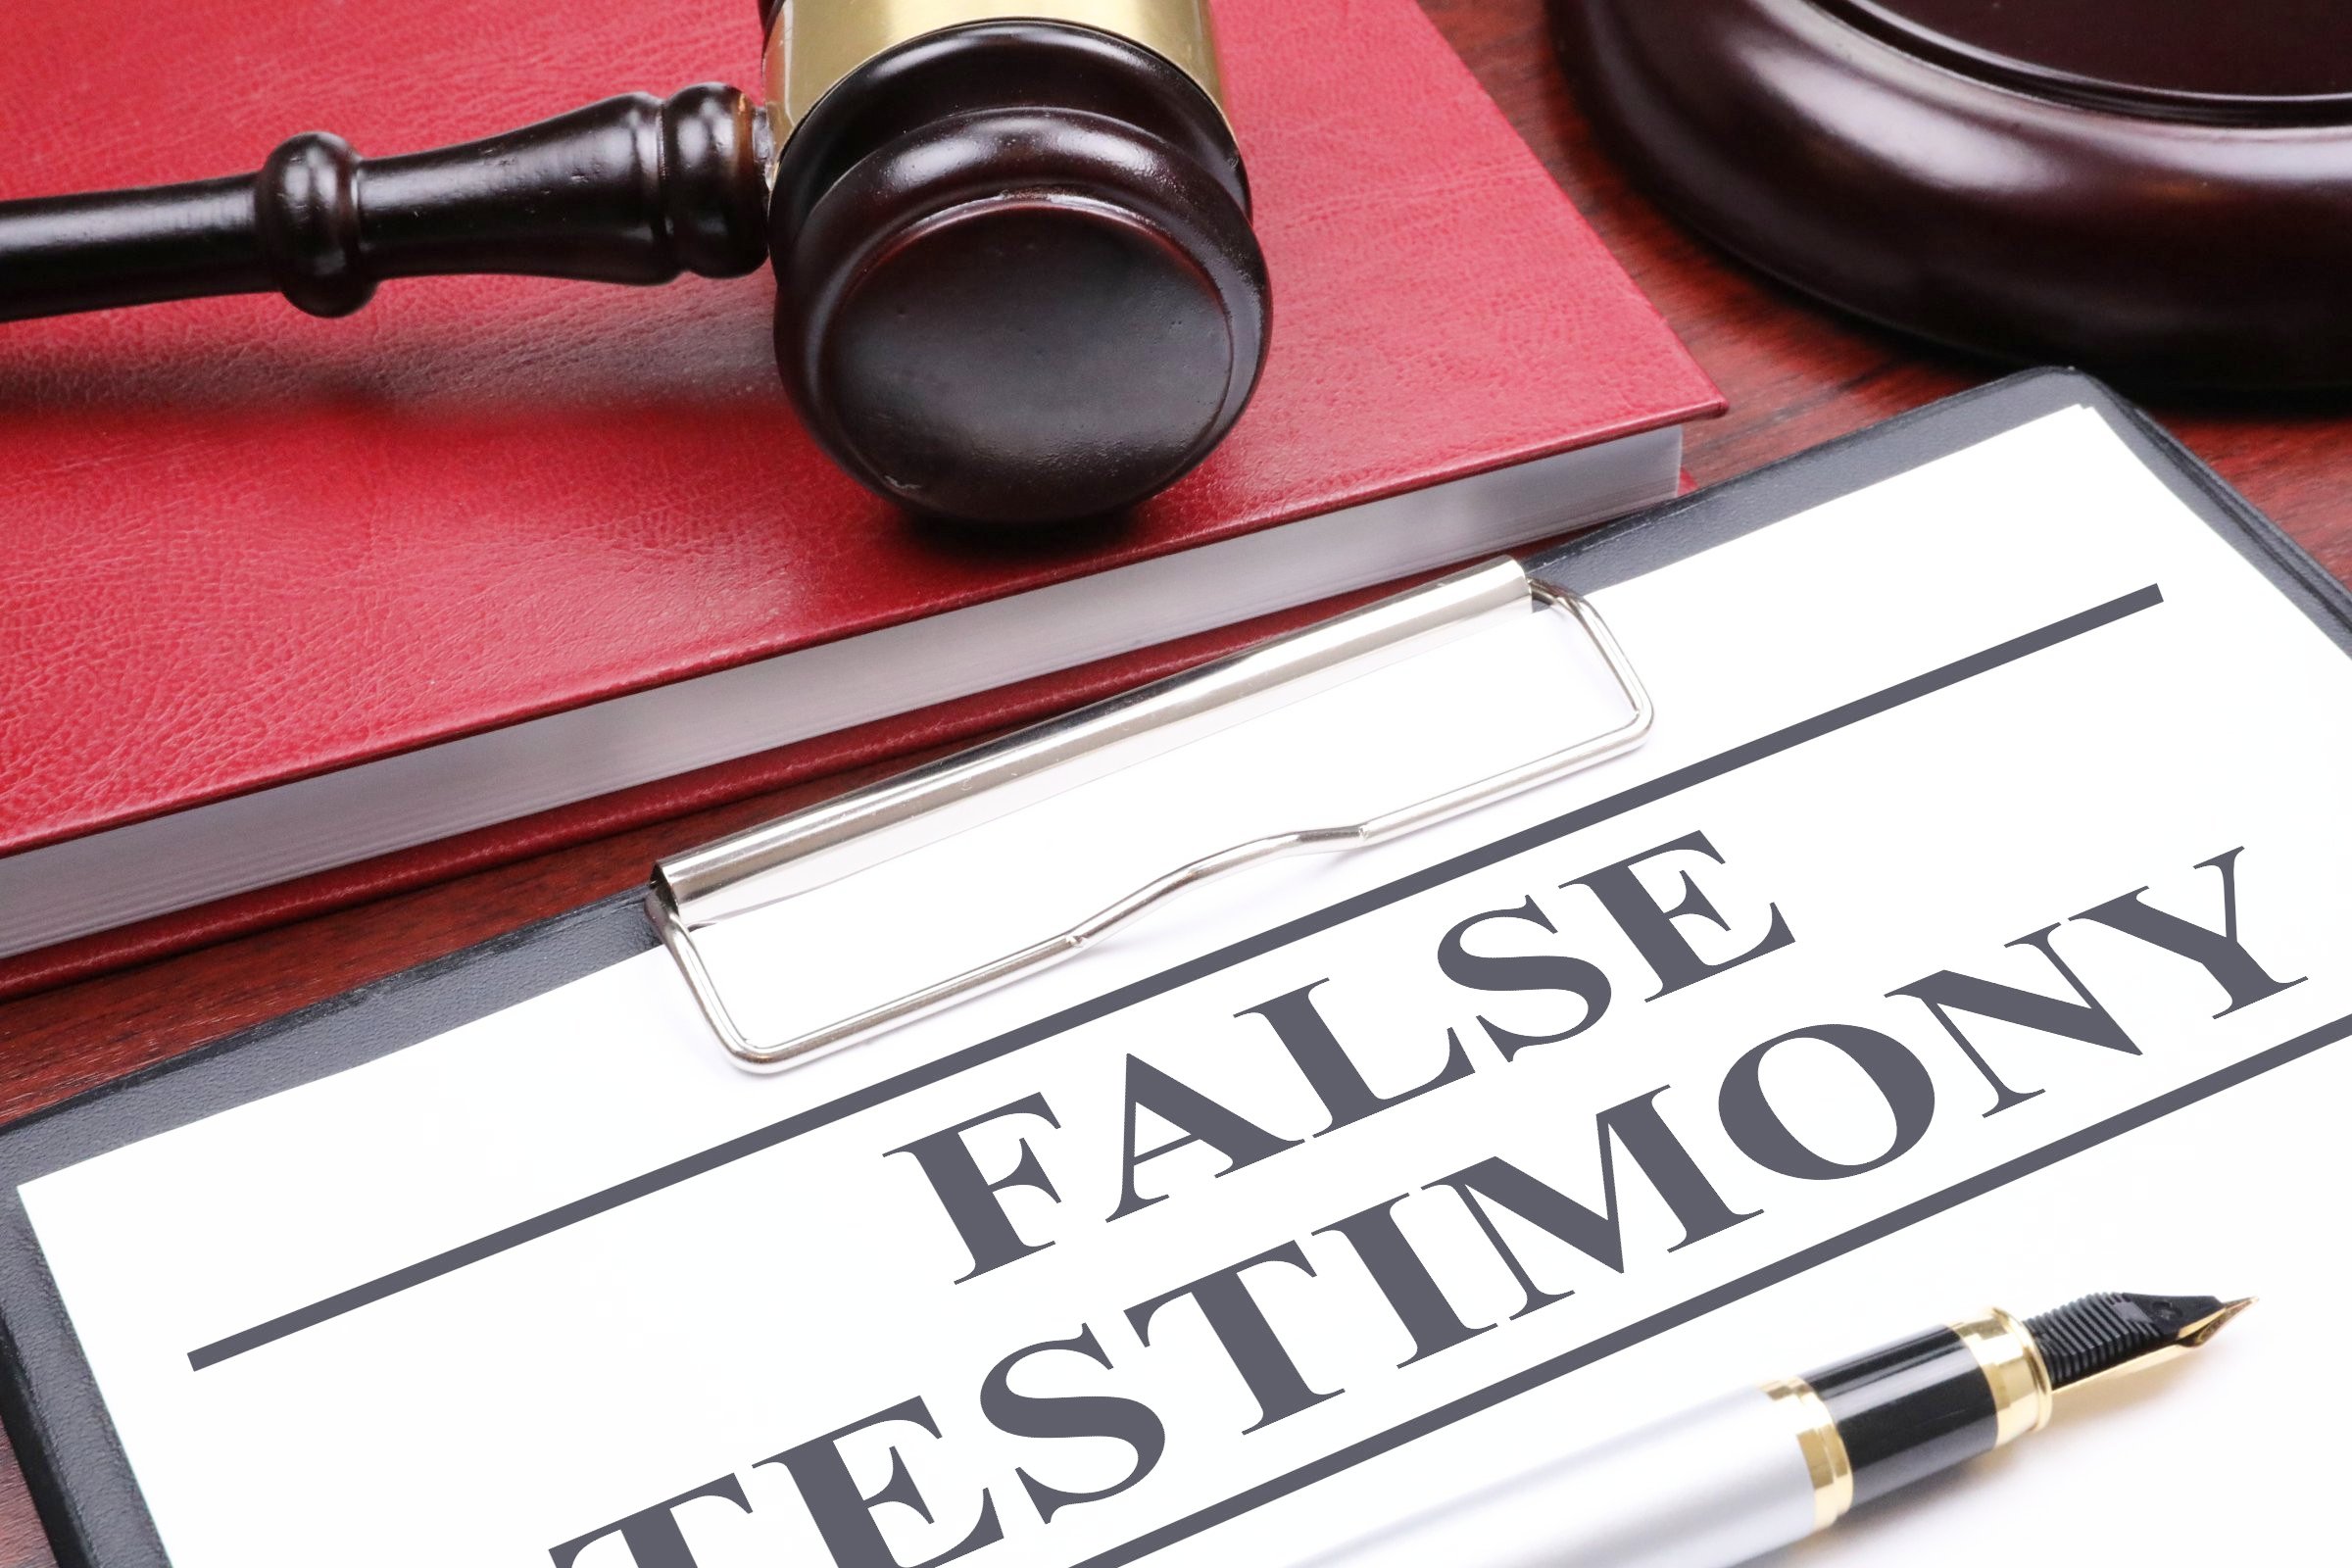 false testimony